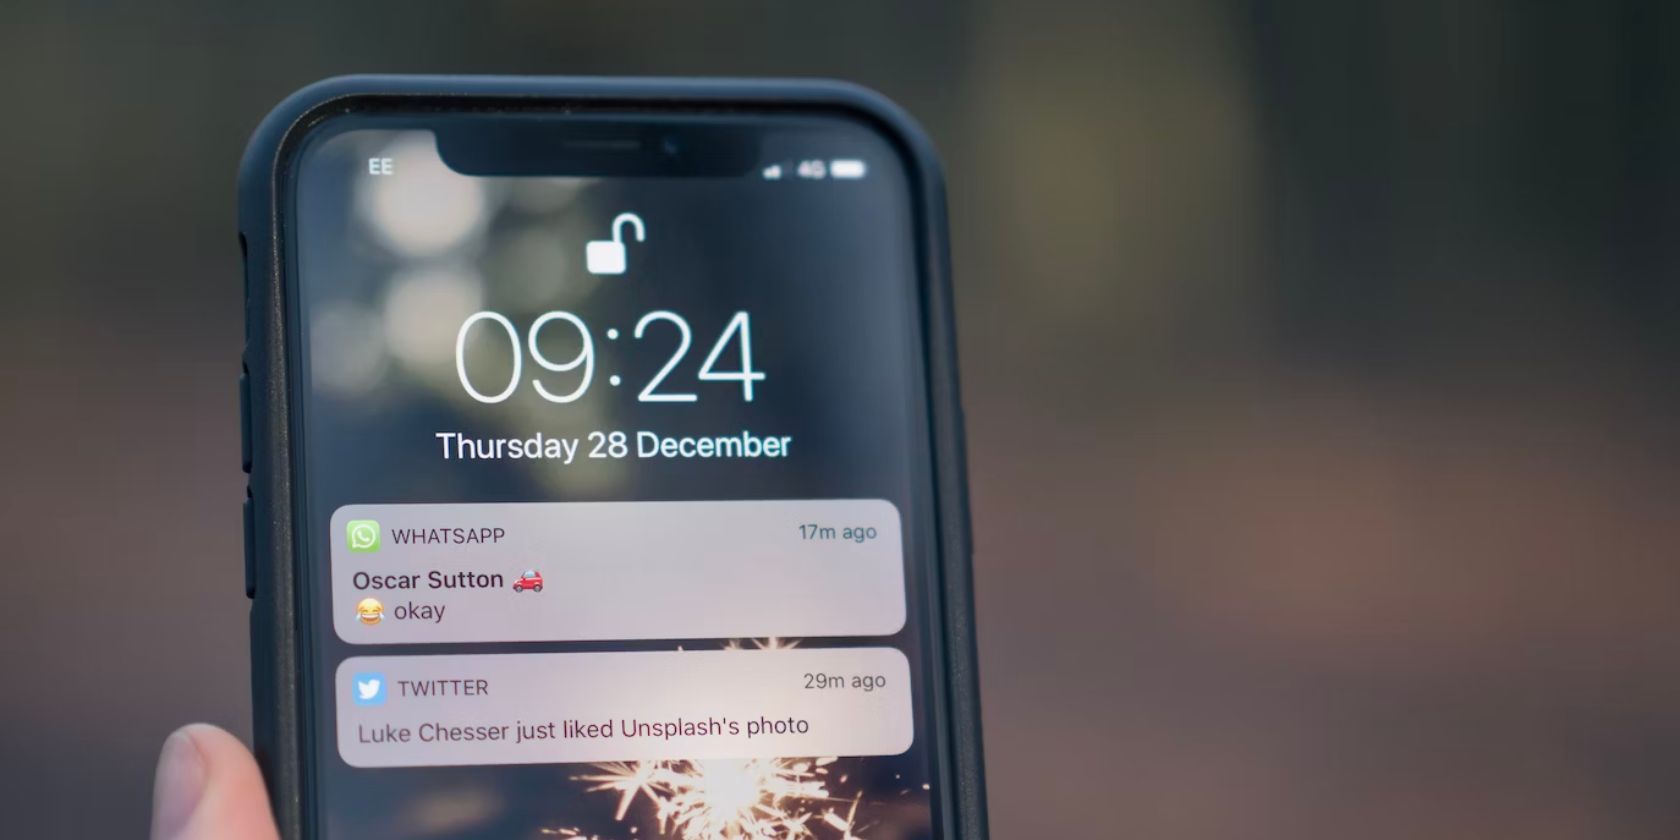 iphone lock screen showing notifications